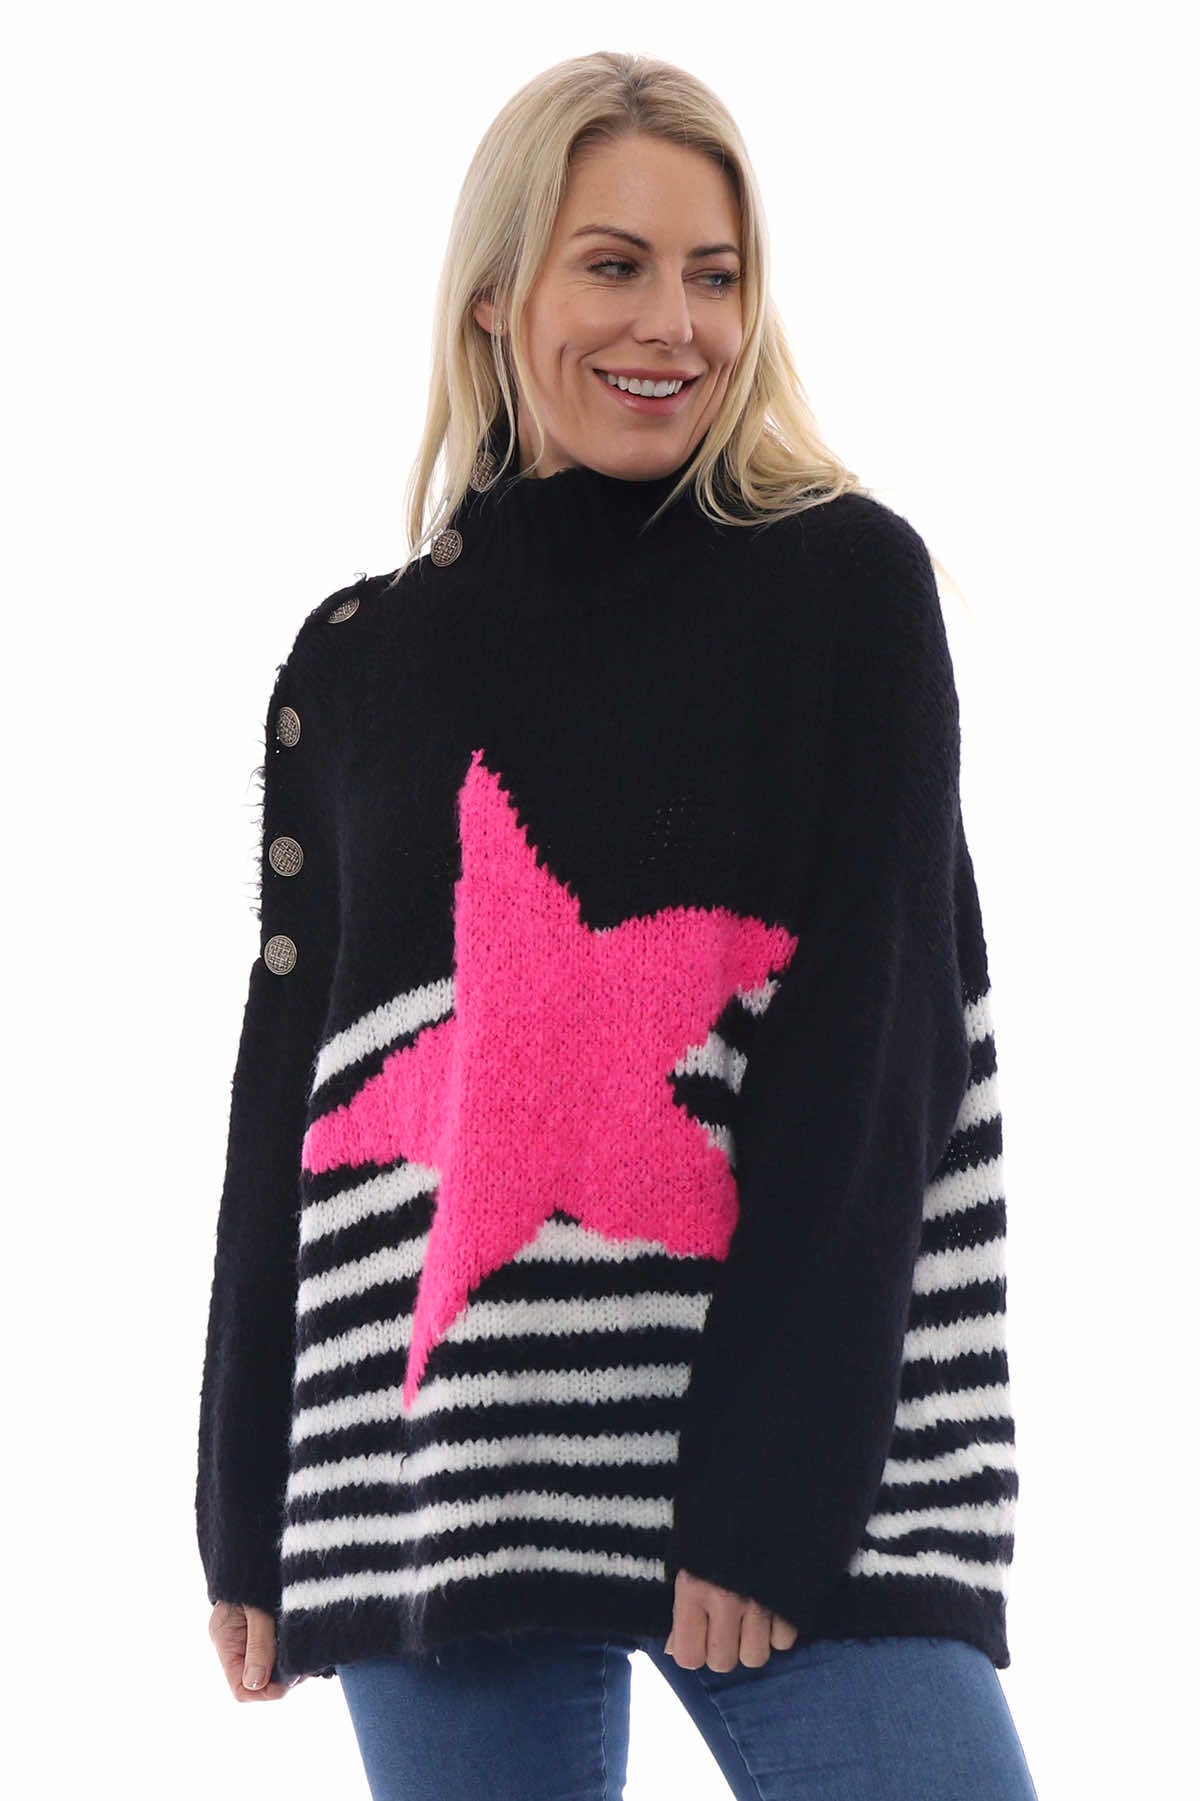 Agata Star Knitted Jumper Black